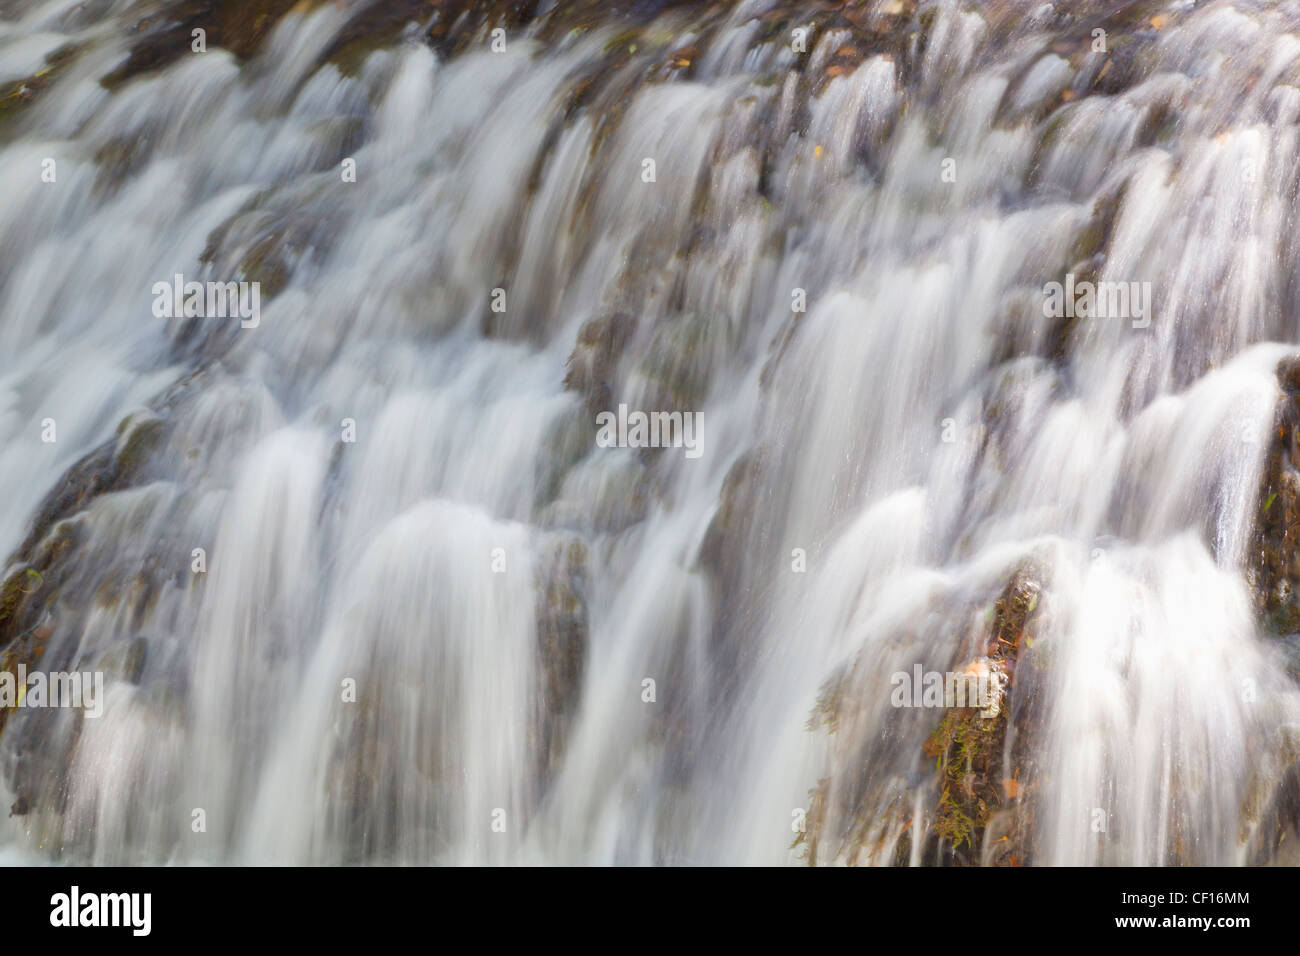 Cascades of water in Monasterio de Piedra Natural Park, Zaragoza Province, Aragon, Spain. Stock Photo